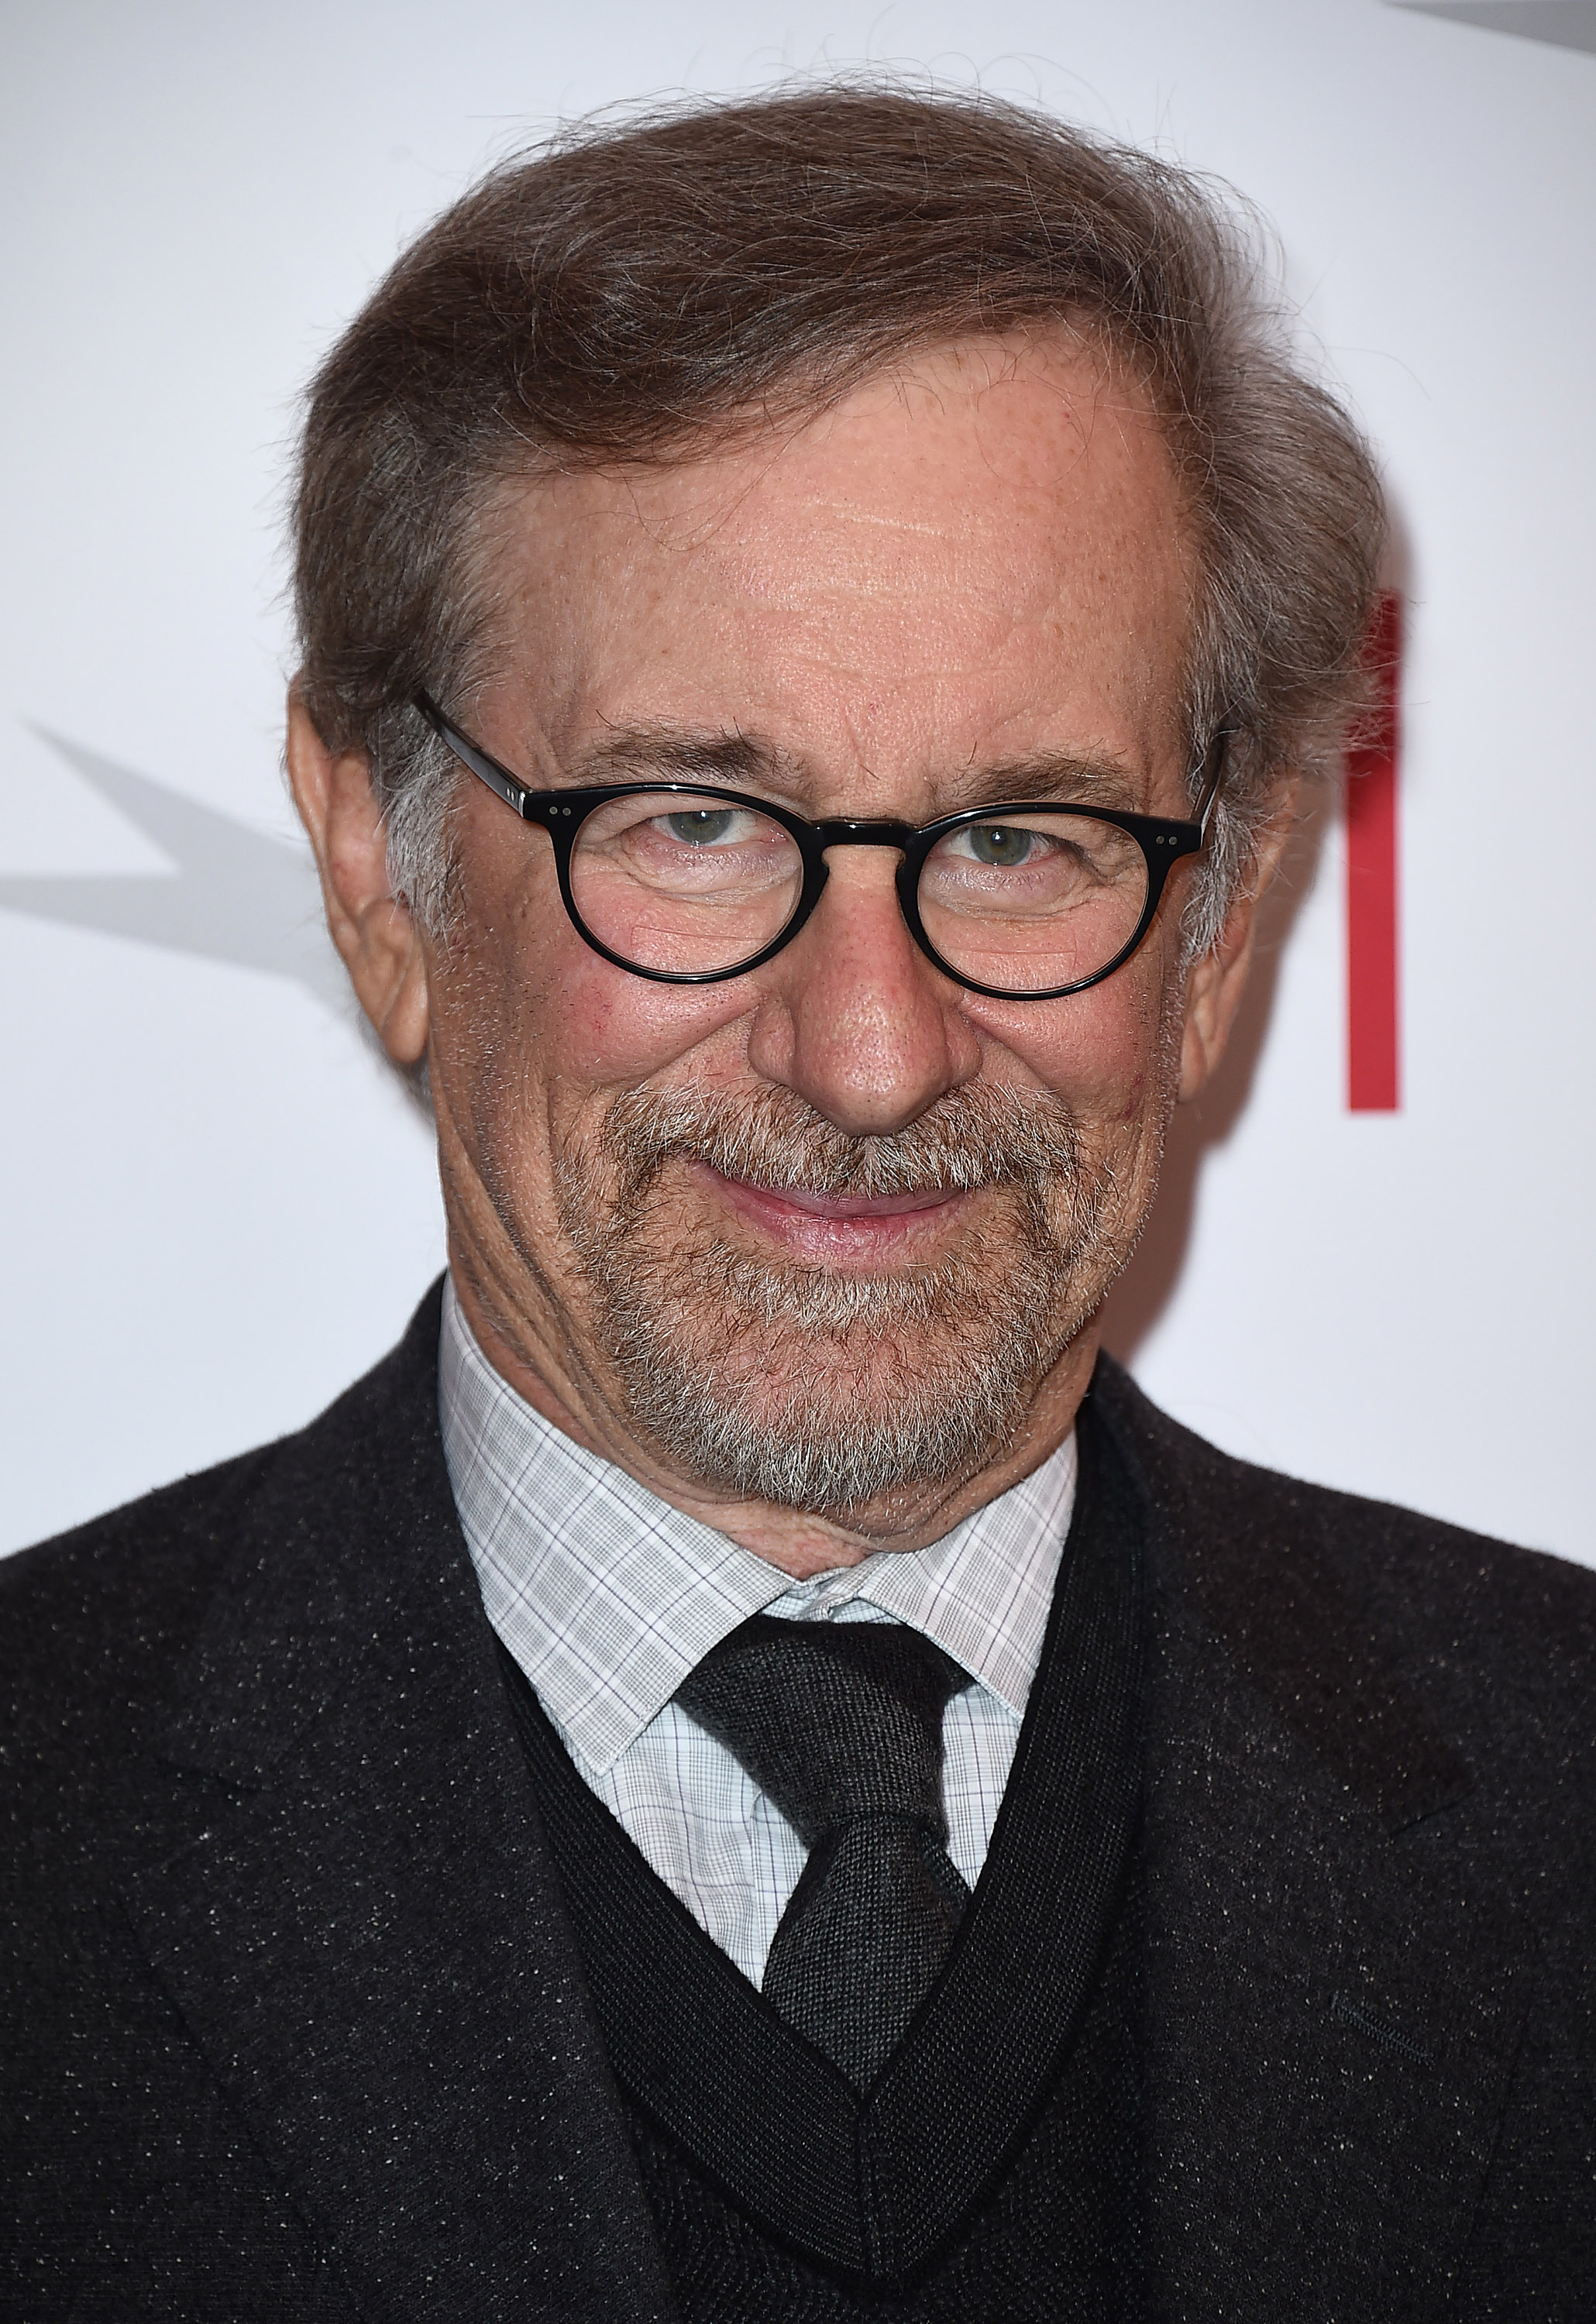 Steven Spielberg arrives at the AFI Awards in Los Angeles on Jan. 9, 2015. (Jordan Strauss—AP)